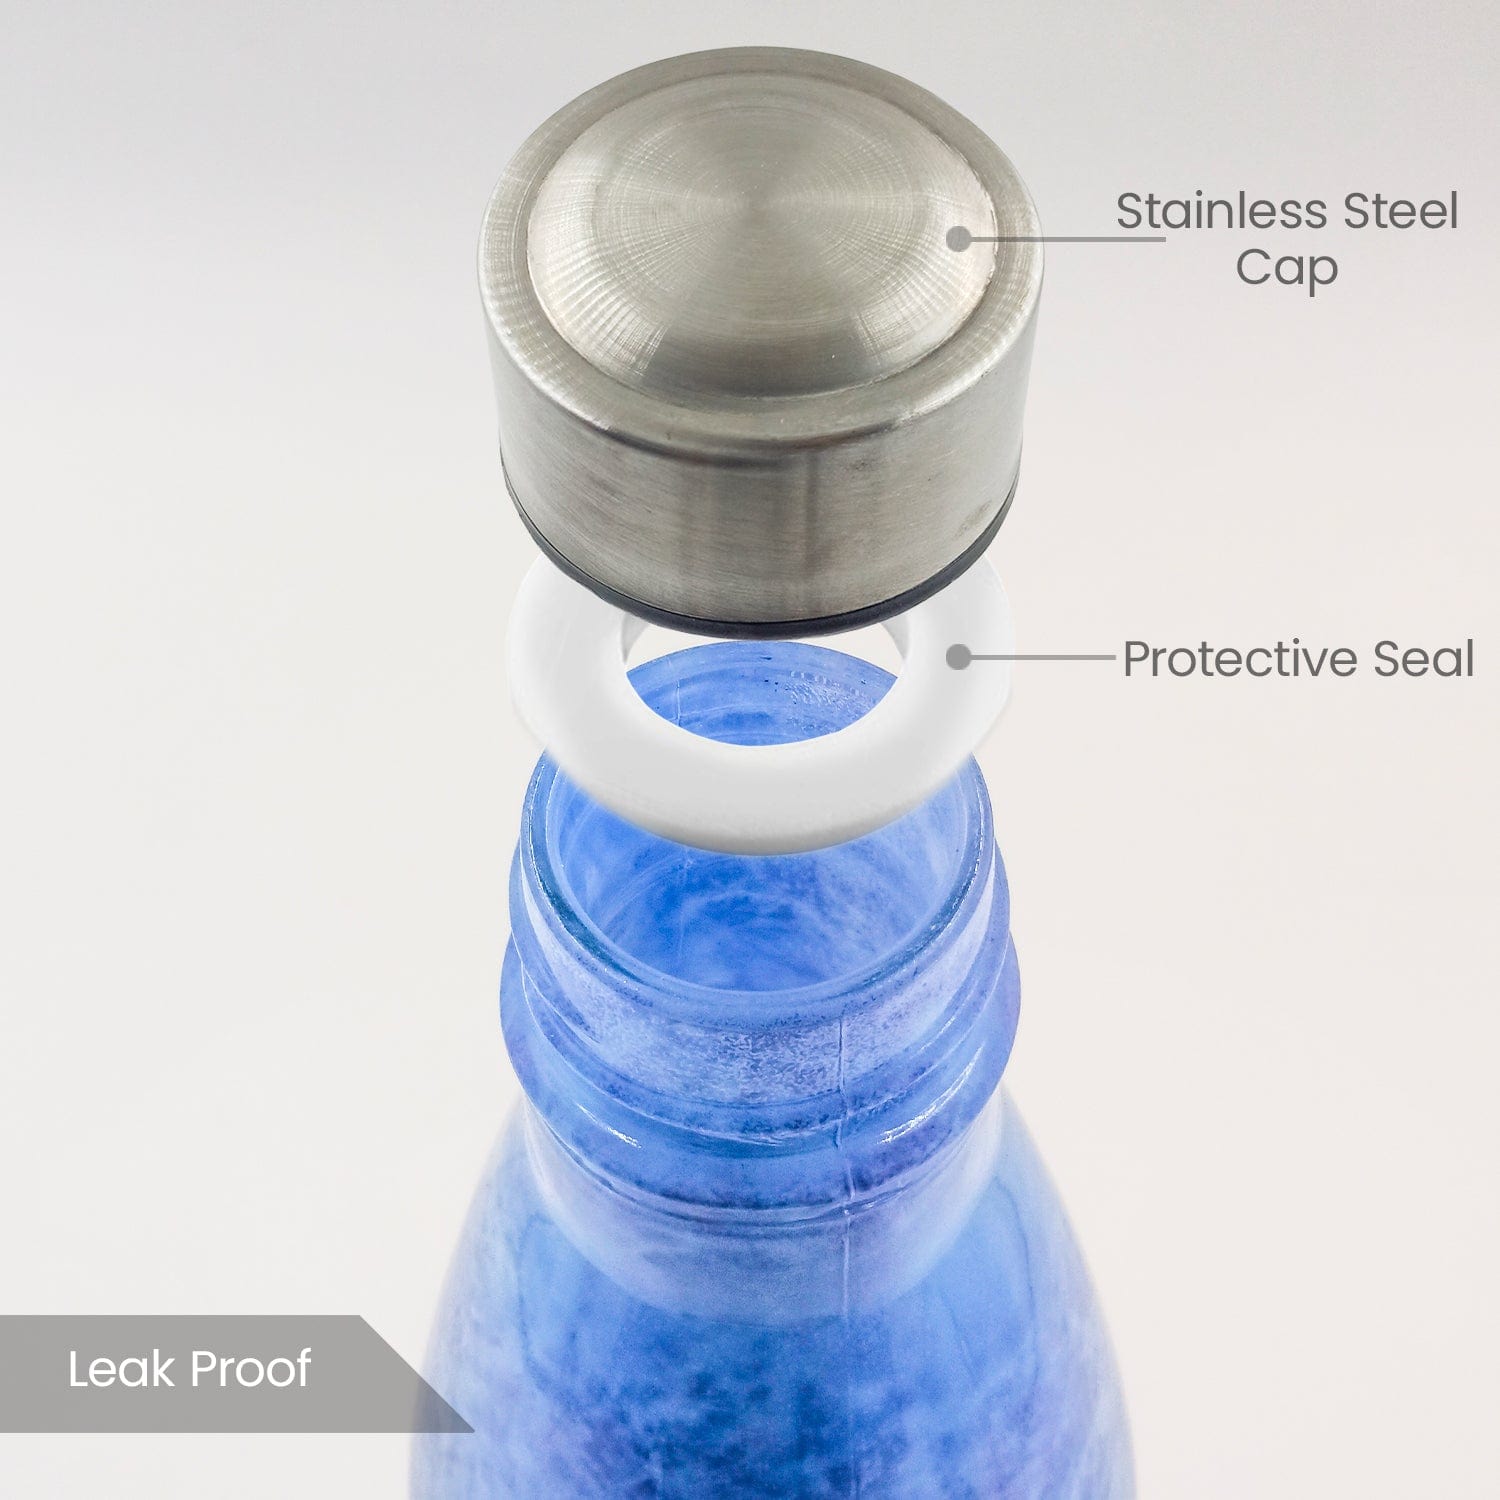 Red Butler Bottles Decorative Glass Bottle 750ml | 4pcs Set | White & Blue QGBF75A1 Redbutler